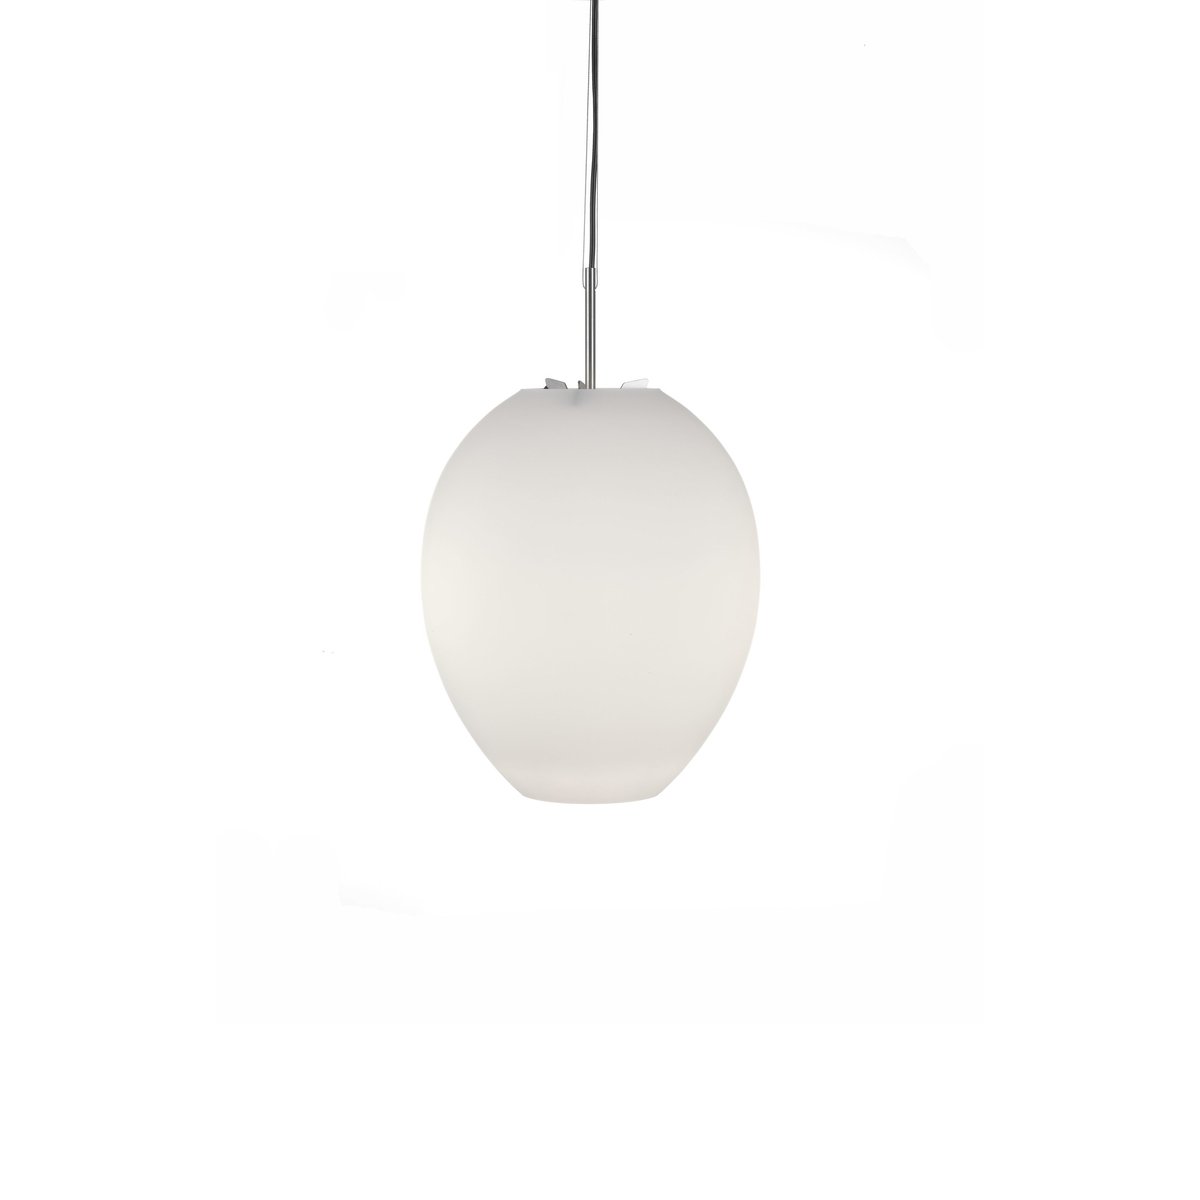 Bsweden Egg hanglamp wit/roestvrij staal, opaalglas